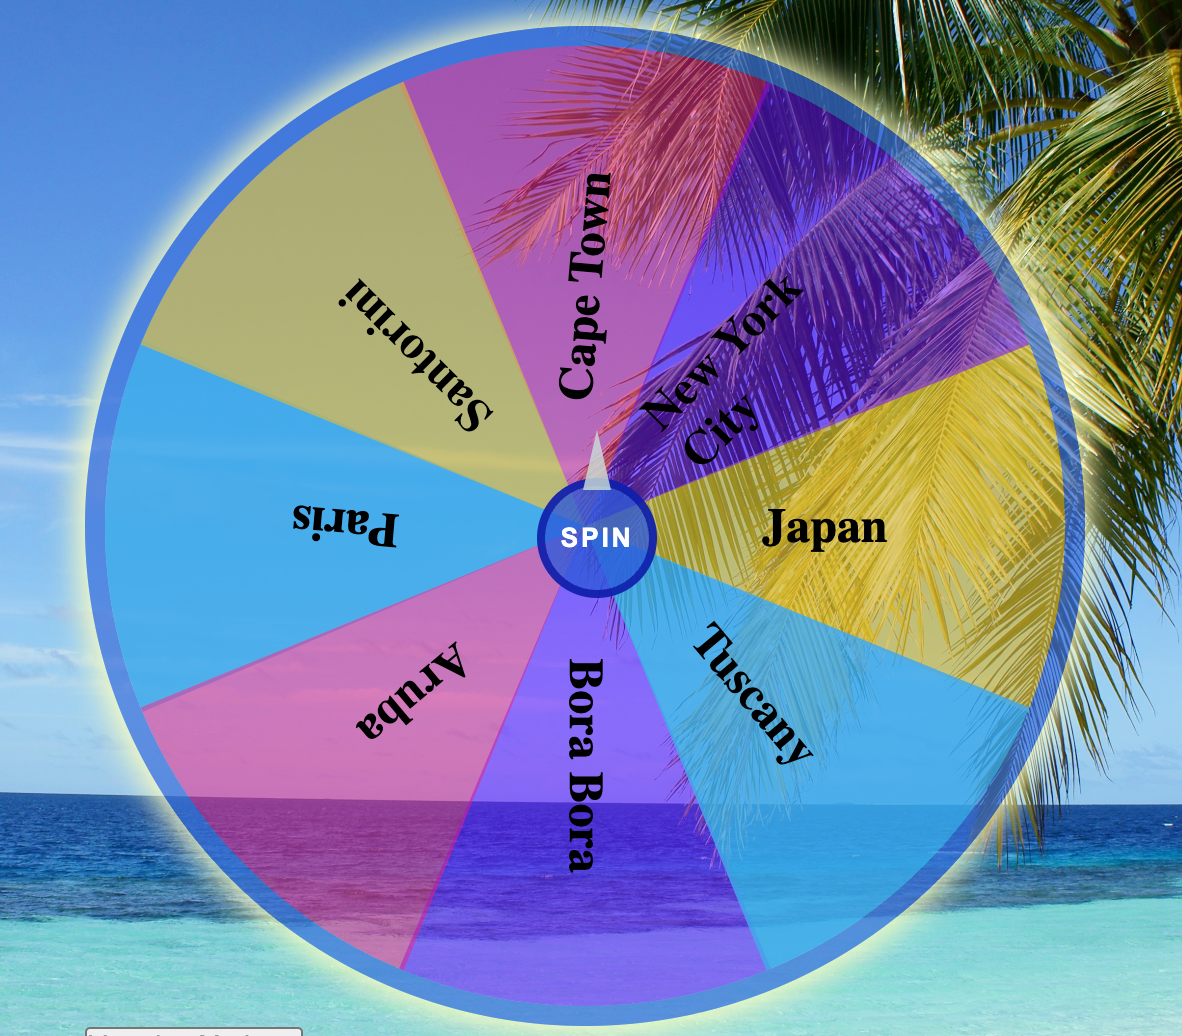 Spin Wheel using CSS & Javascript